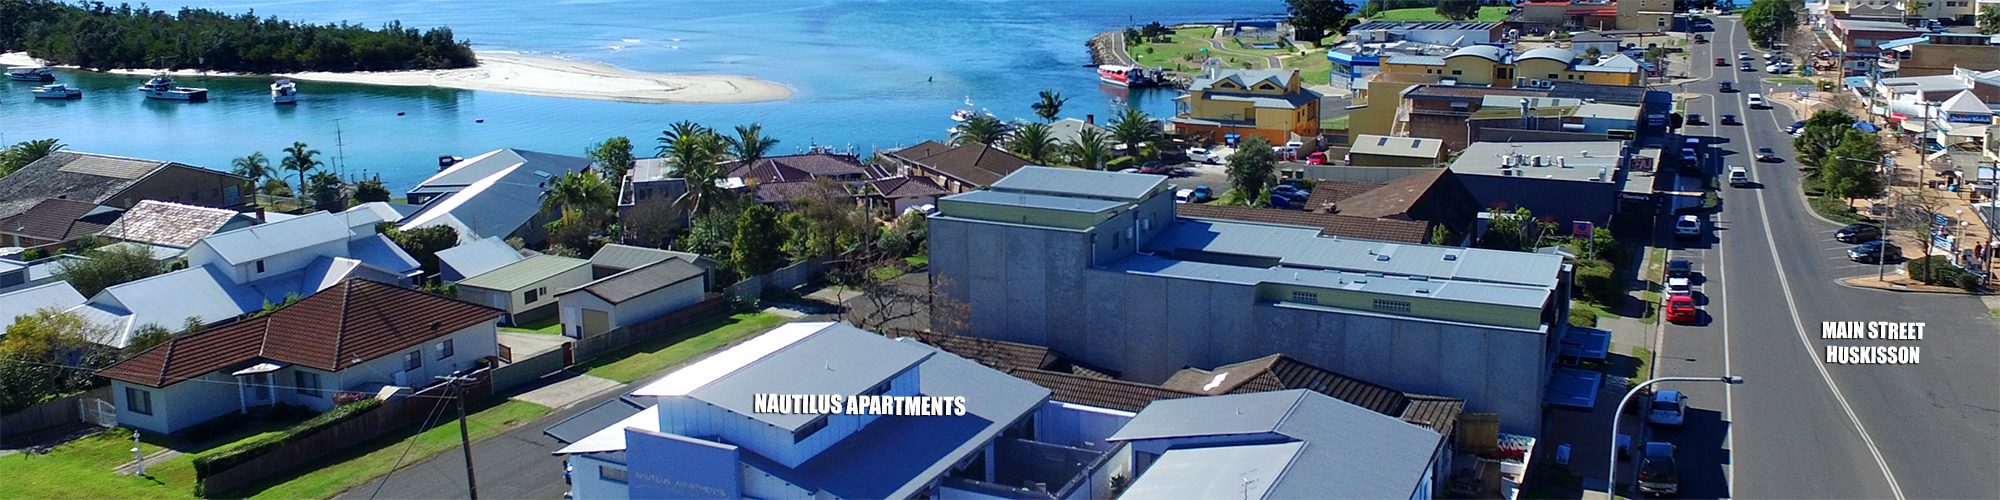 Nautilus Apartments Jervis Bay: exterior drone view of Nautilus Apartments